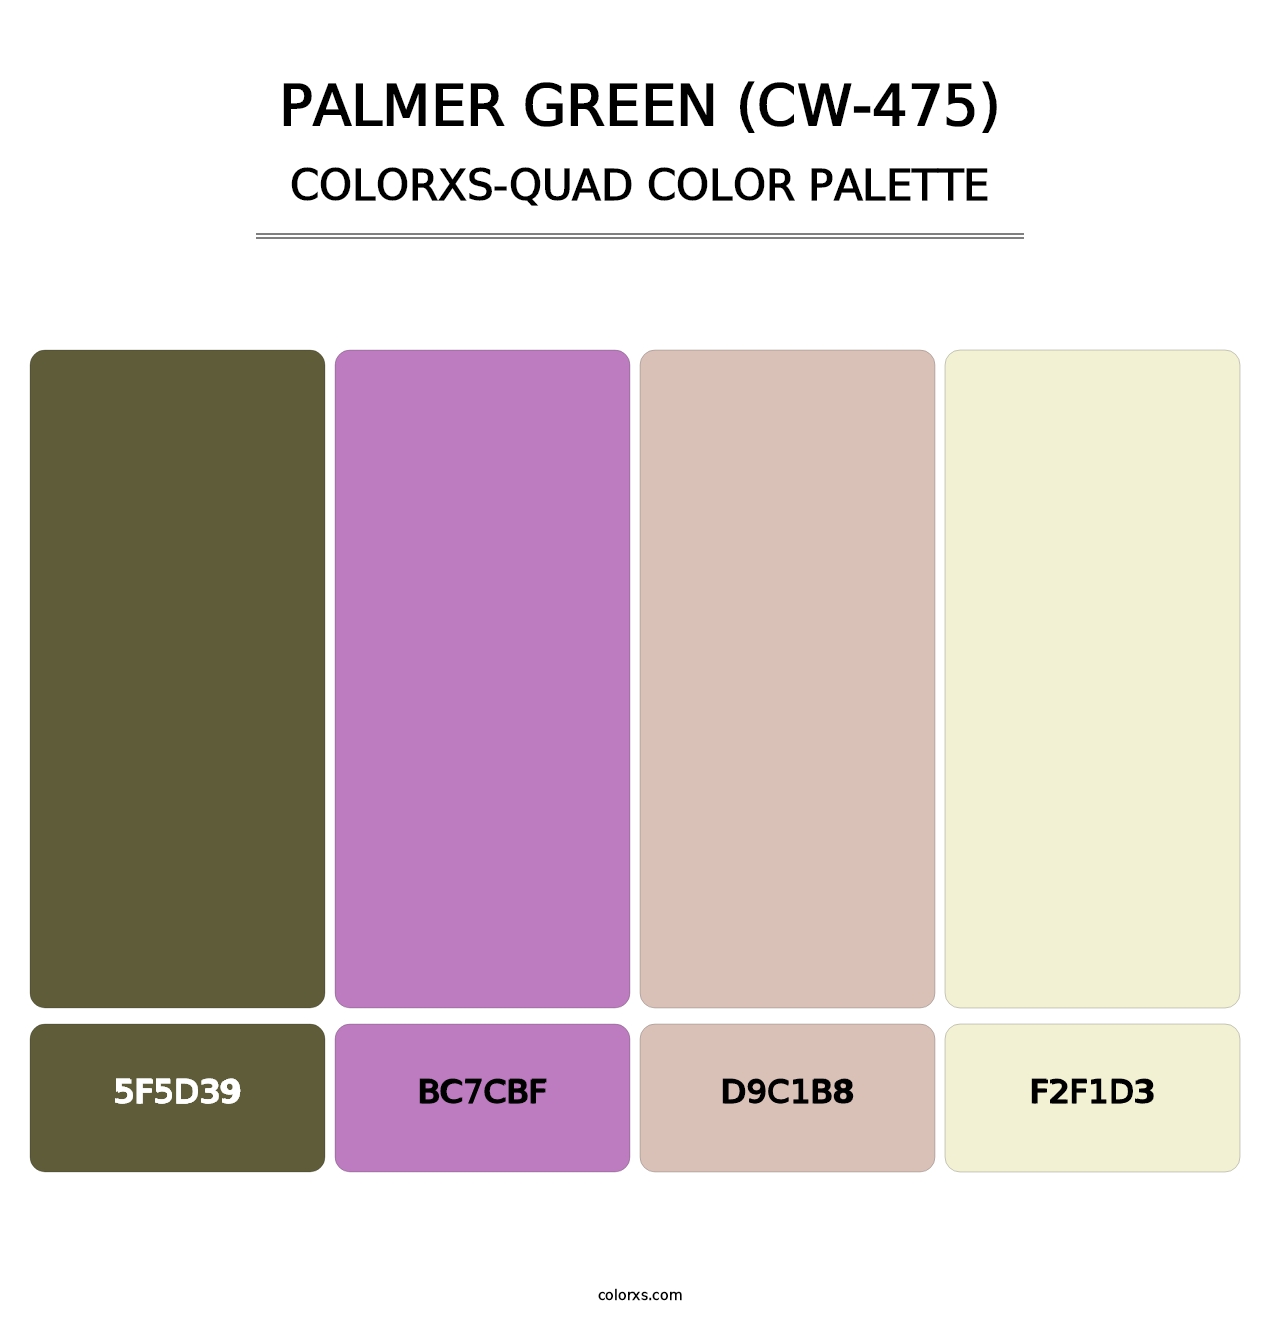 Palmer Green (CW-475) - Colorxs Quad Palette